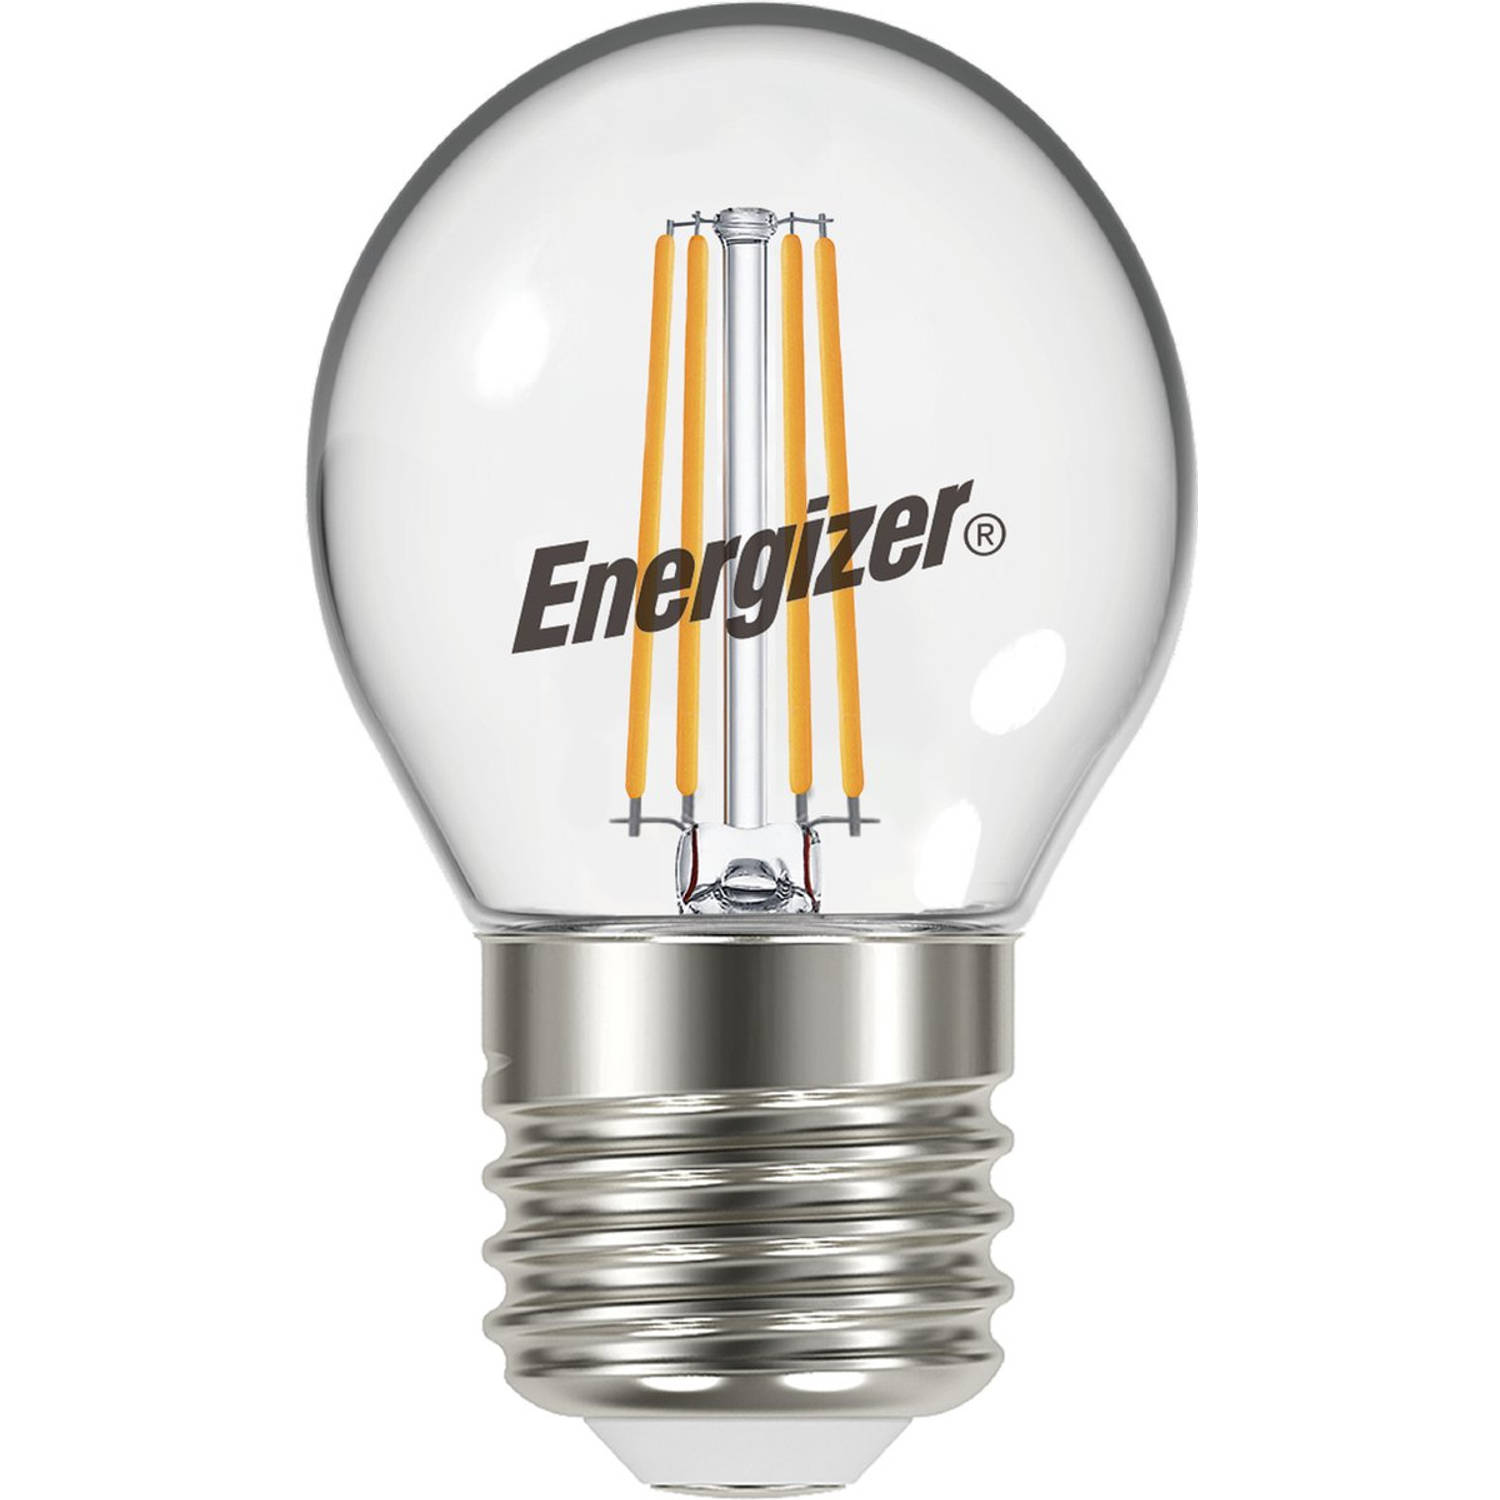 Energizer energiezuinige Led filament kogellamp E27 5 Watt warmwit licht dimbaar 5 stuks